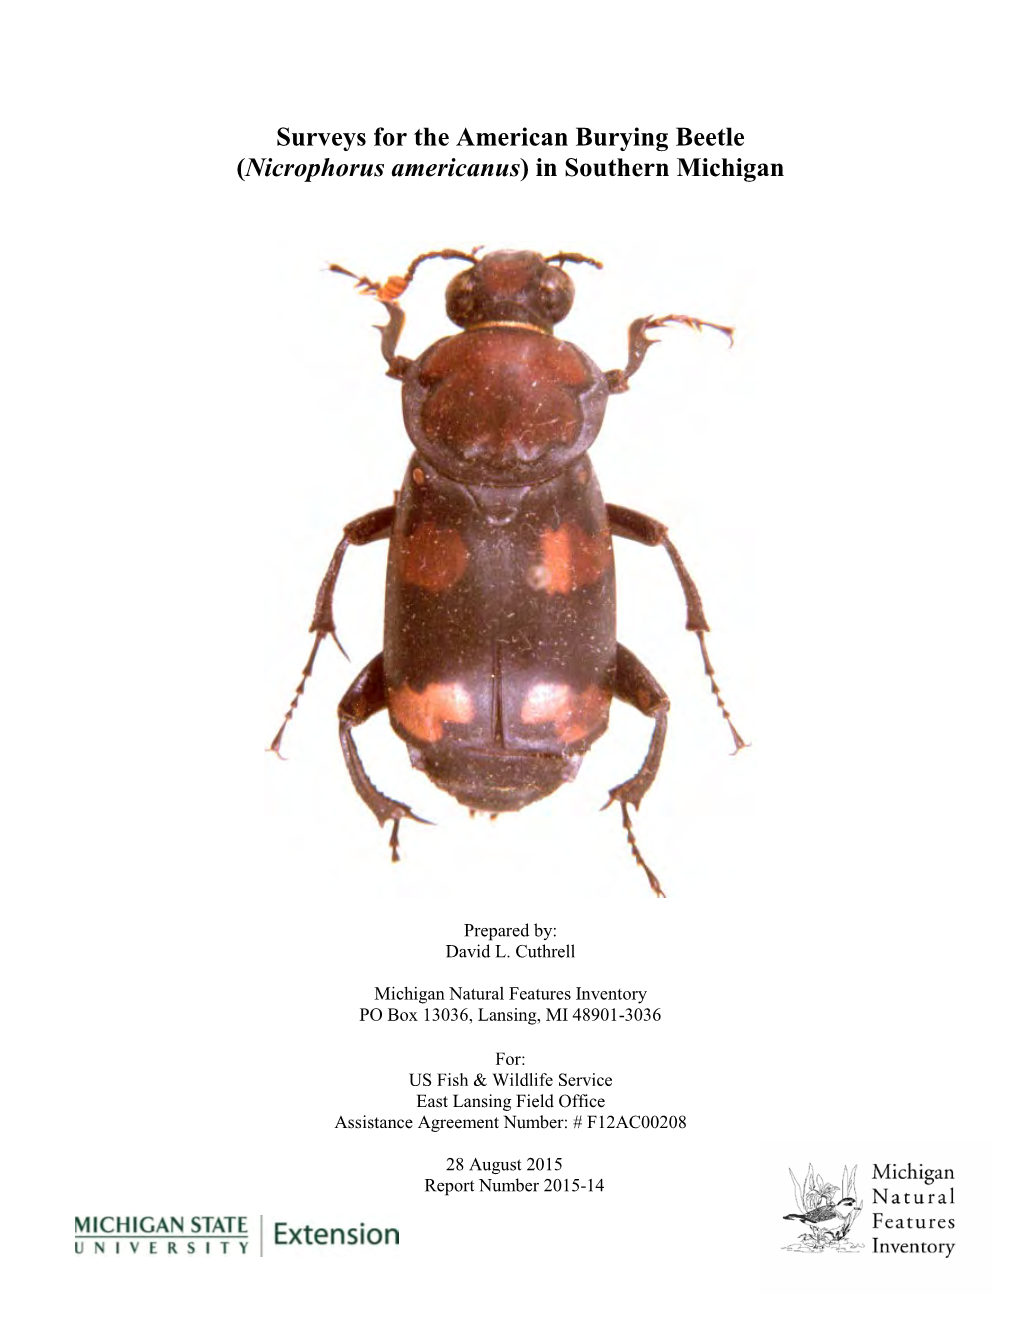 Surveys for the American Burying Beetle (Nicrophorus Americanus) in Southern Michigan